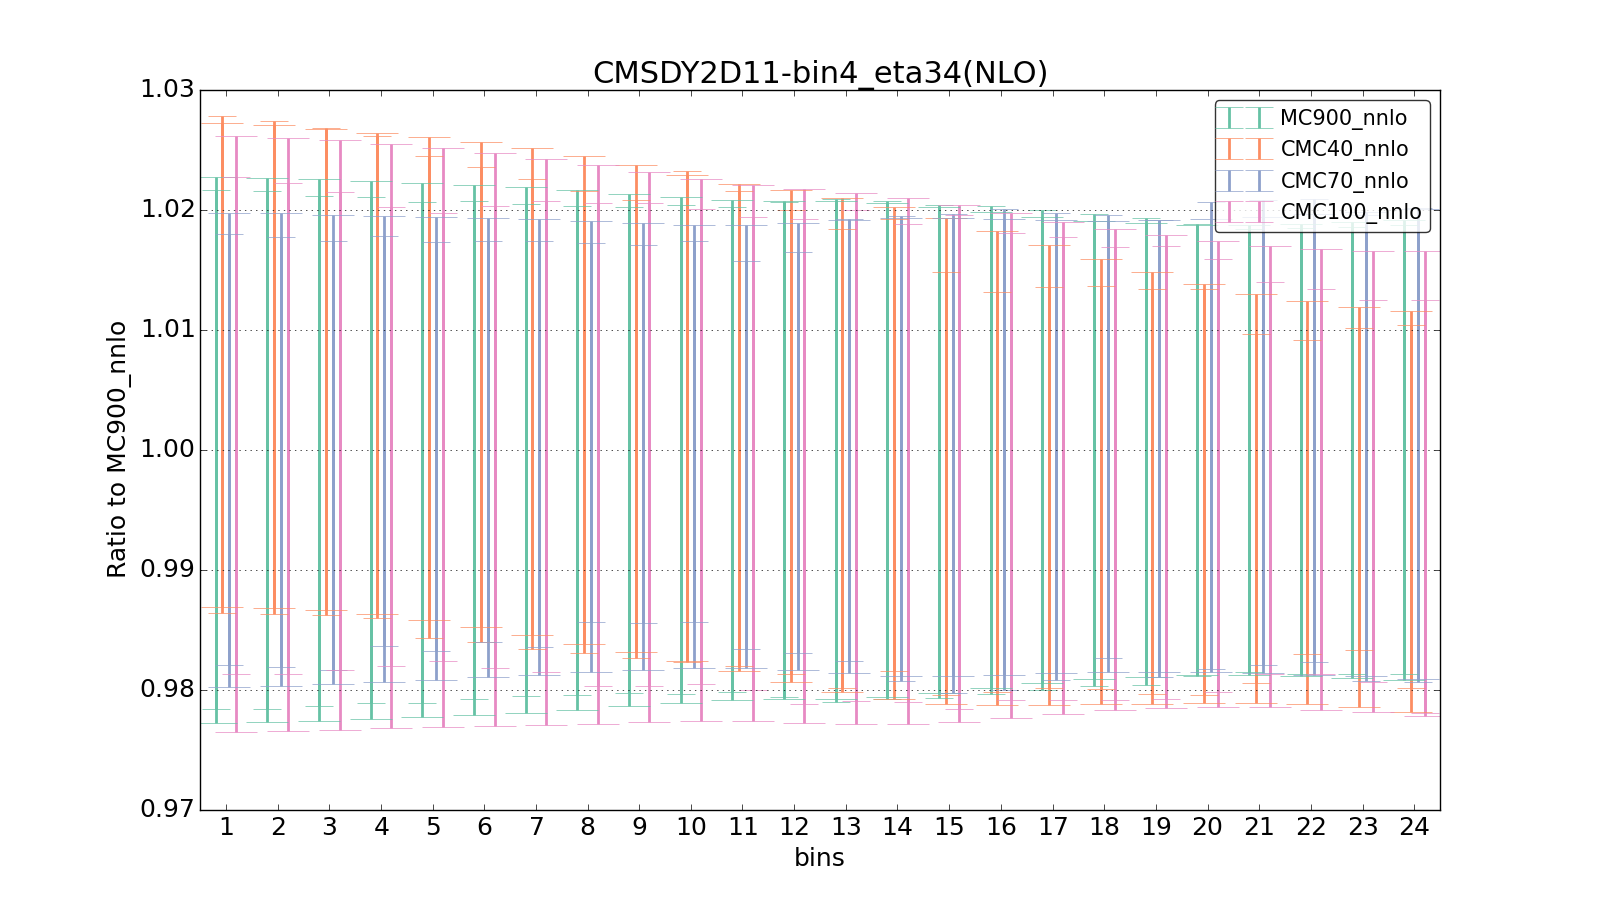 figure plots/CMCpheno/group_0_ciplot_CMSDY2D11-bin4_eta34(NLO).png